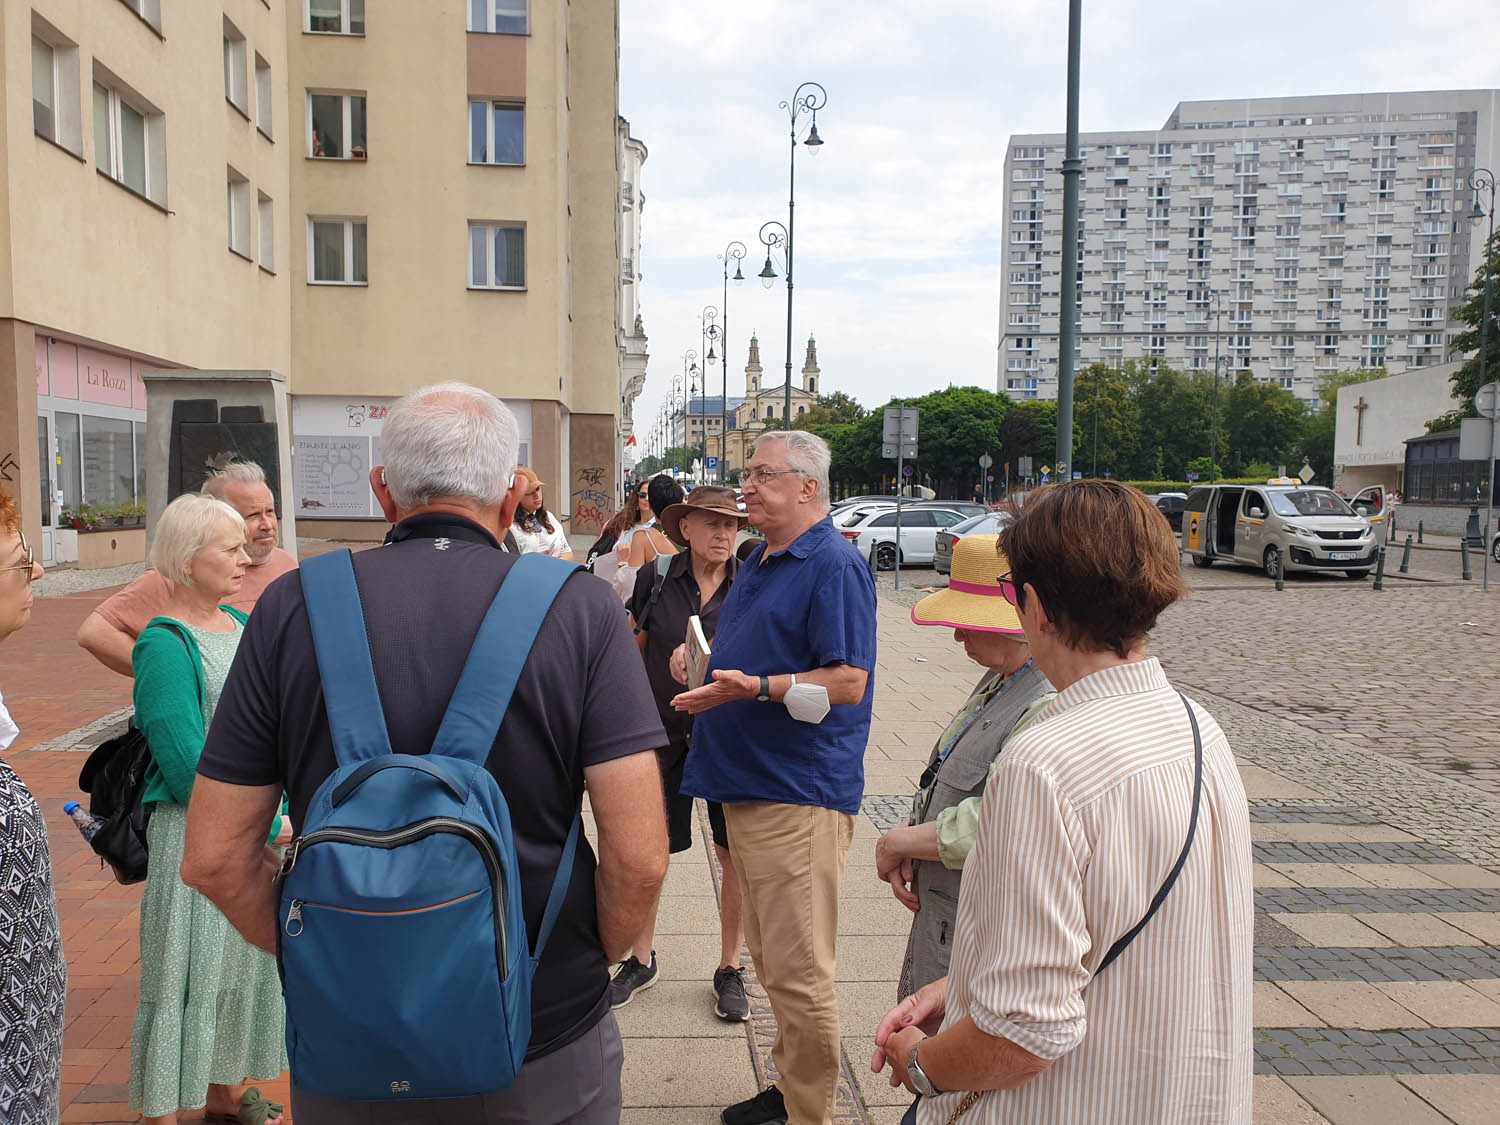 Walking tour through former Jewish ghetto in Warsaw